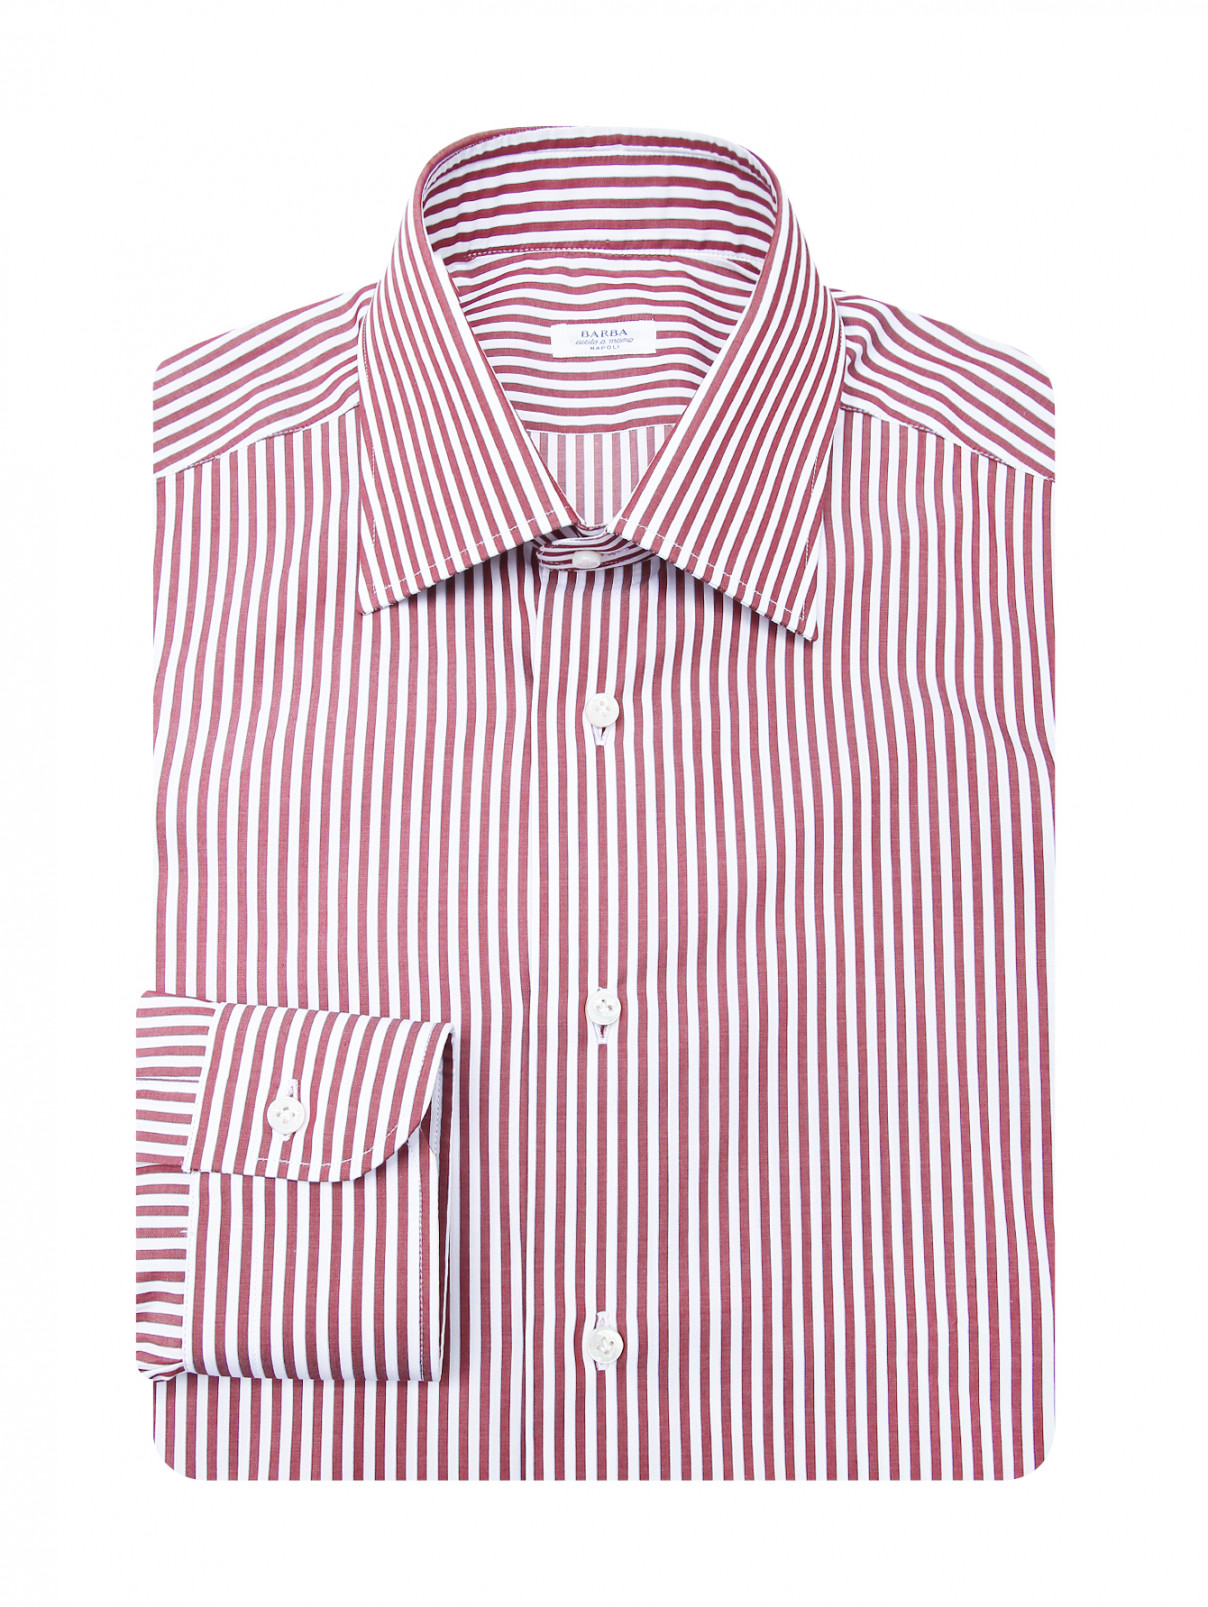 Рубашка из хлопка с узором полоска Barba Napoli  –  Общий вид  – Цвет:  Узор